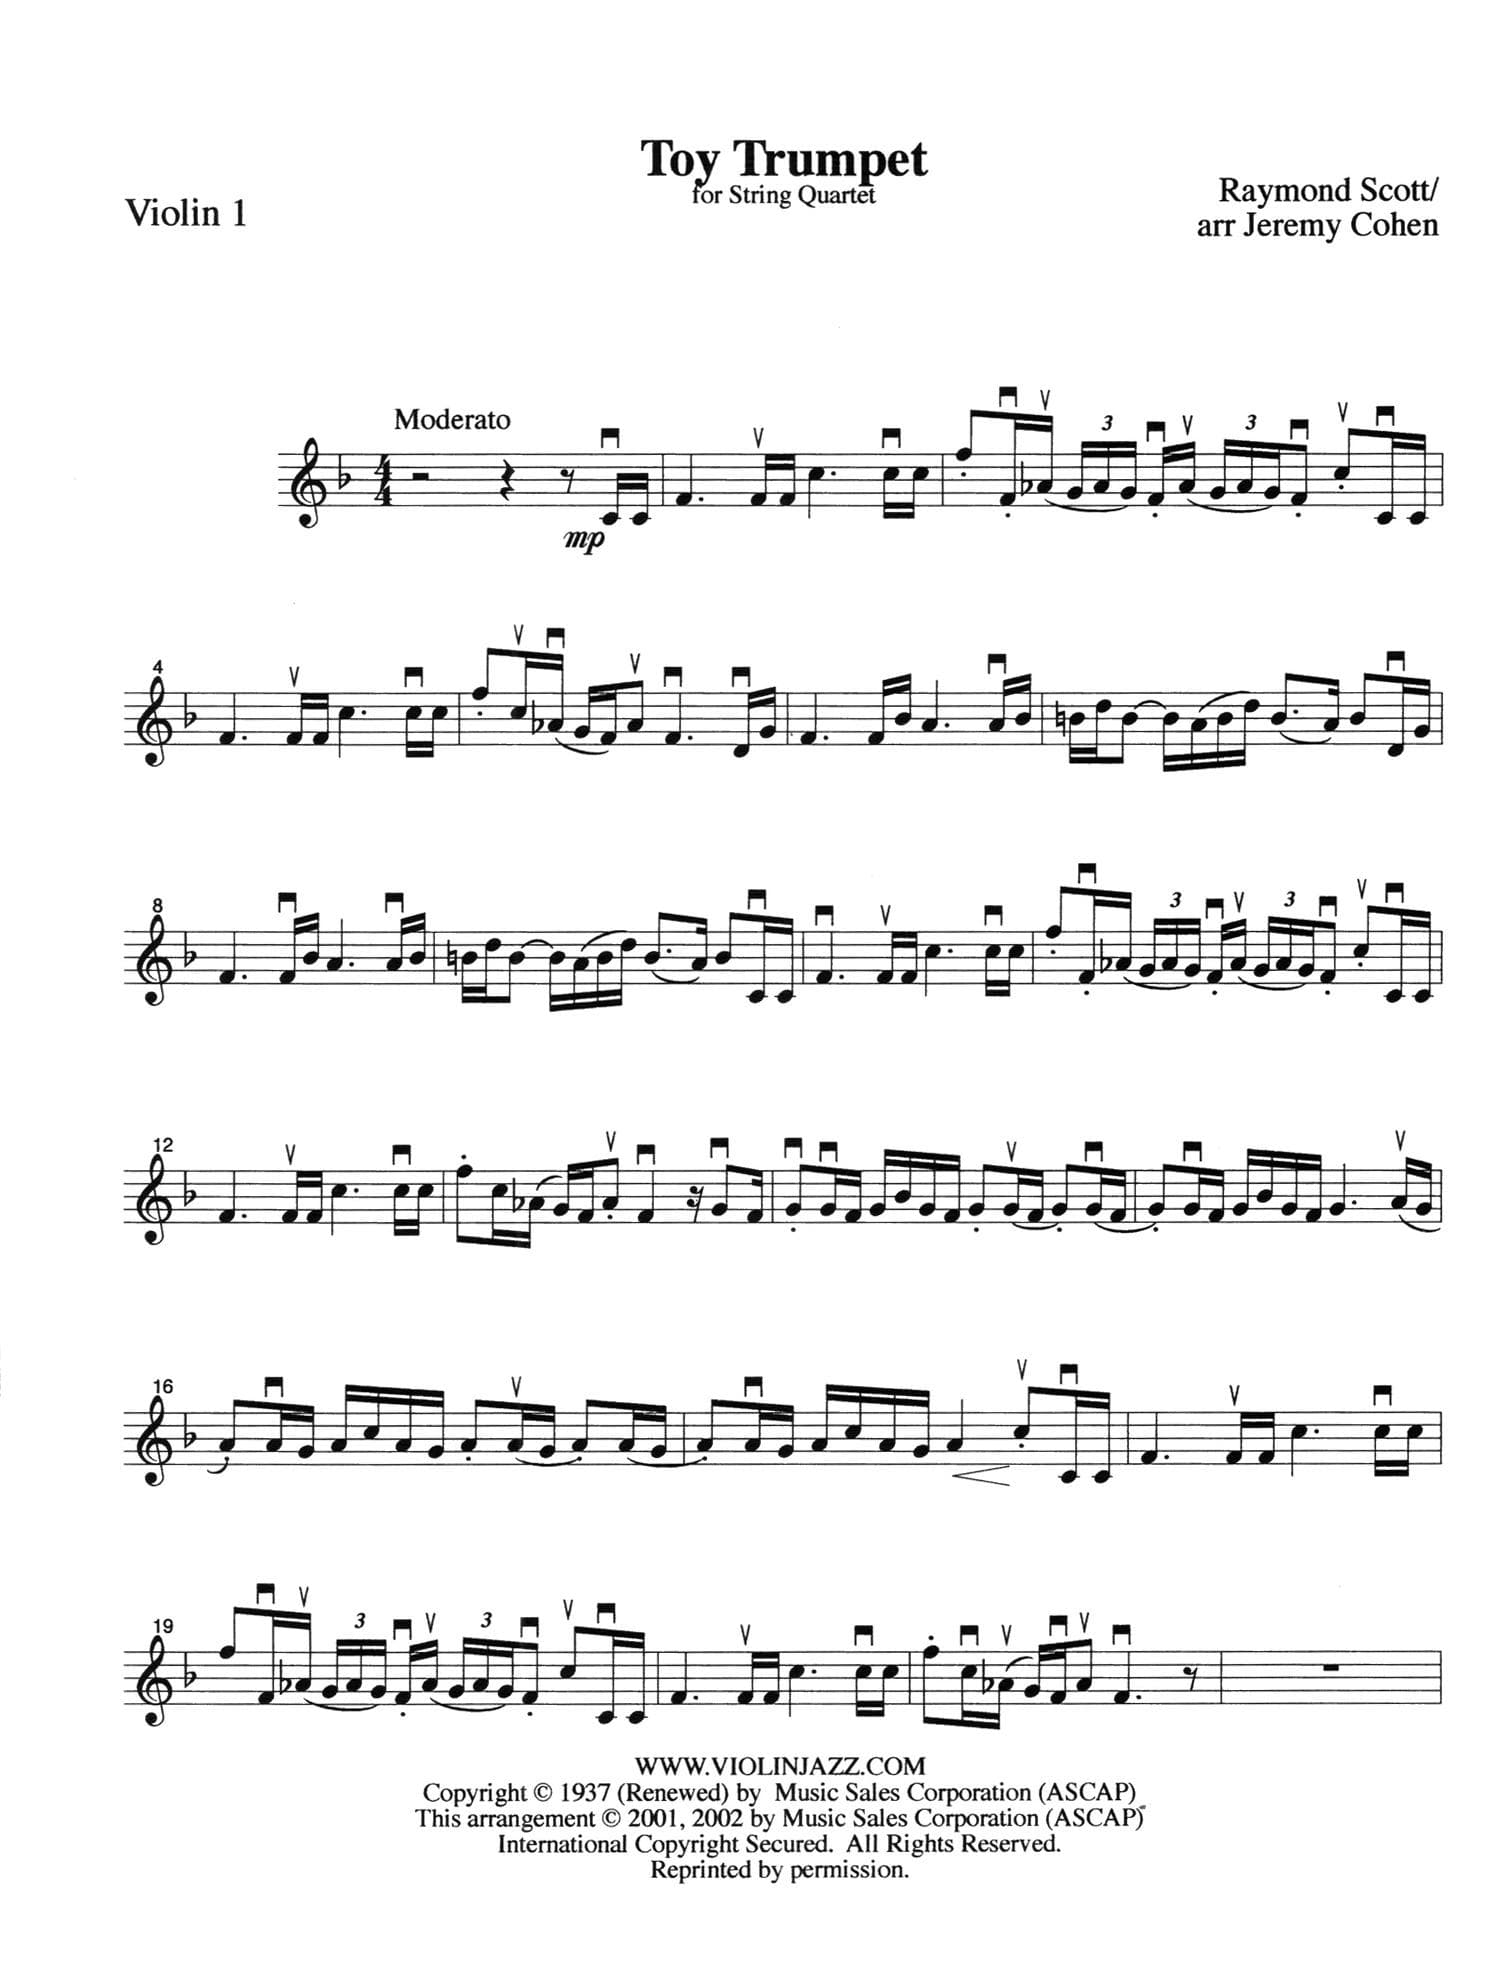 Scott, Raymond - Toy Trumpet - Raymond Scott Collection - for String Quartet - arranged by Jeremy Cohen - Violinjazz Editions